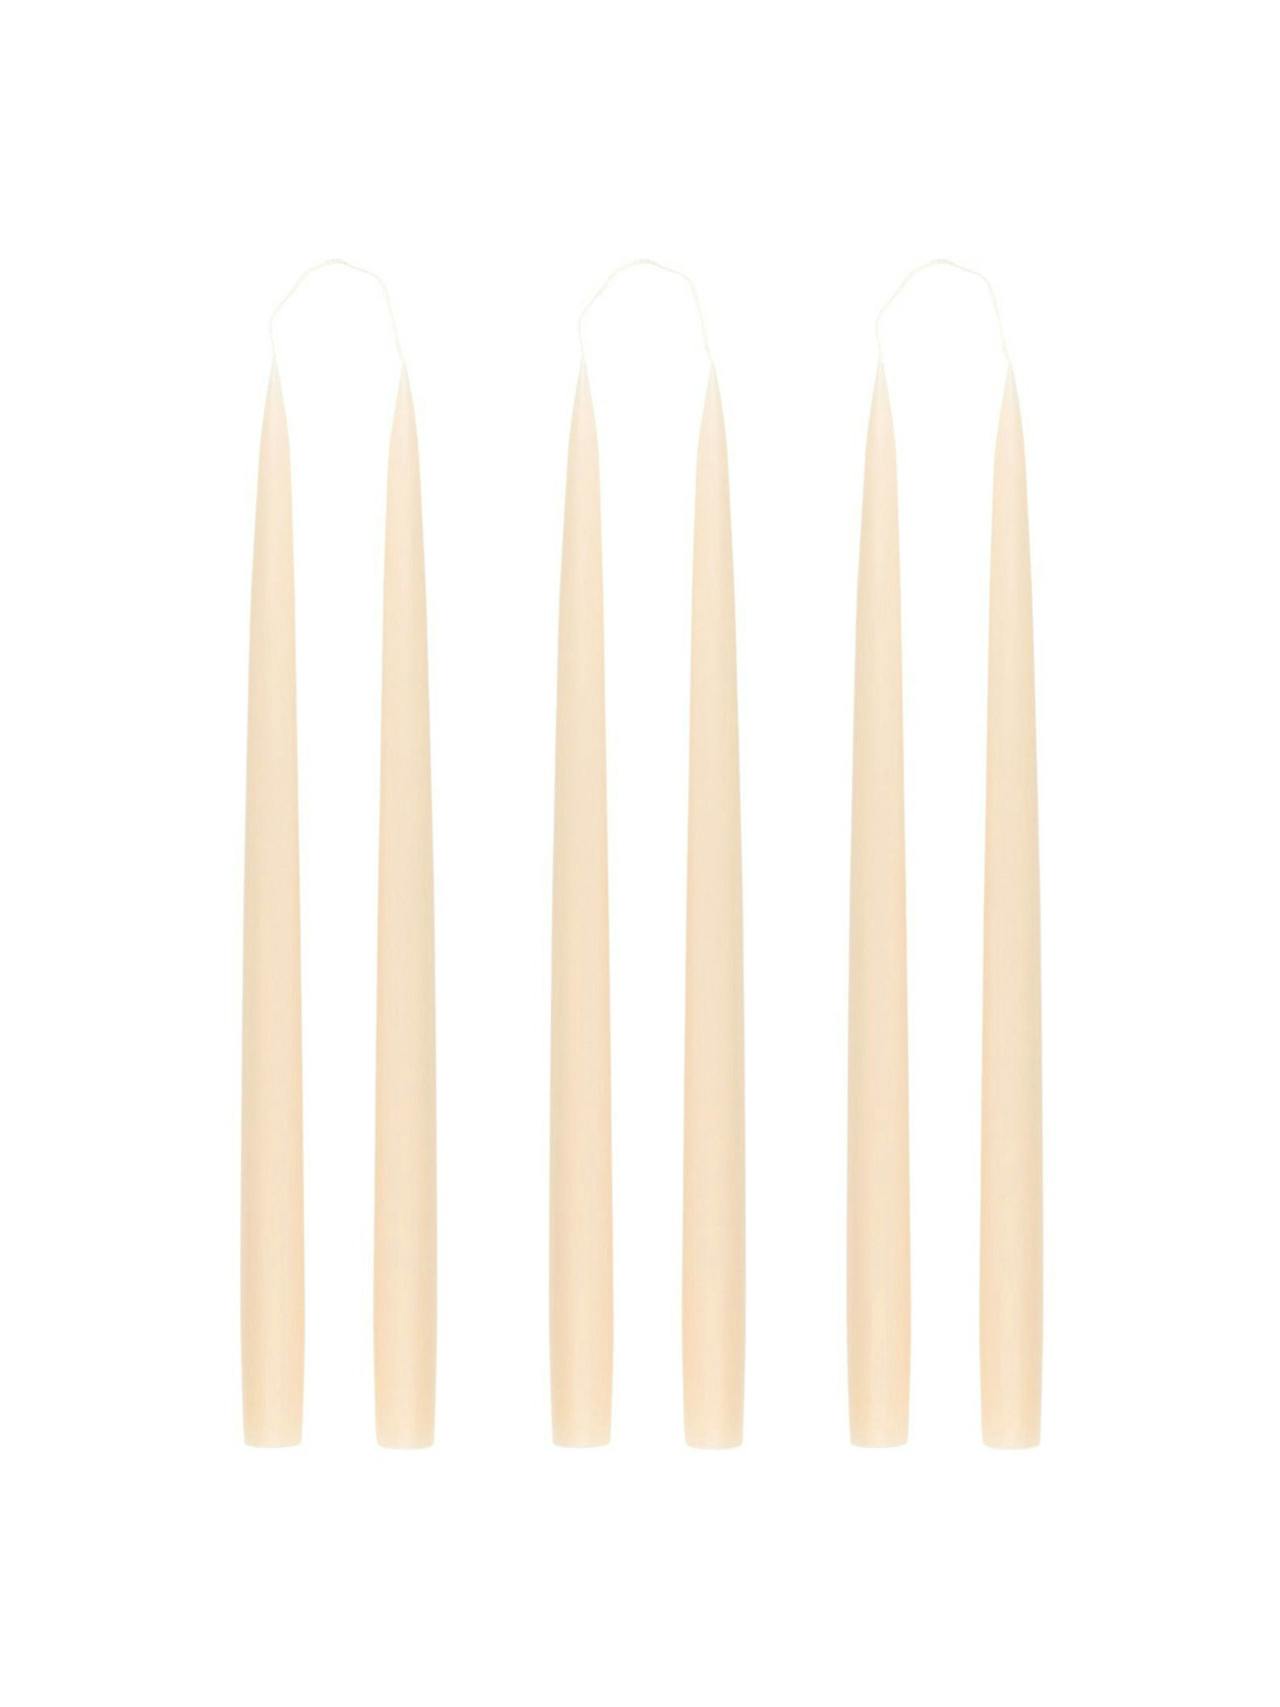 Danish taper candles in plaster, set of 6